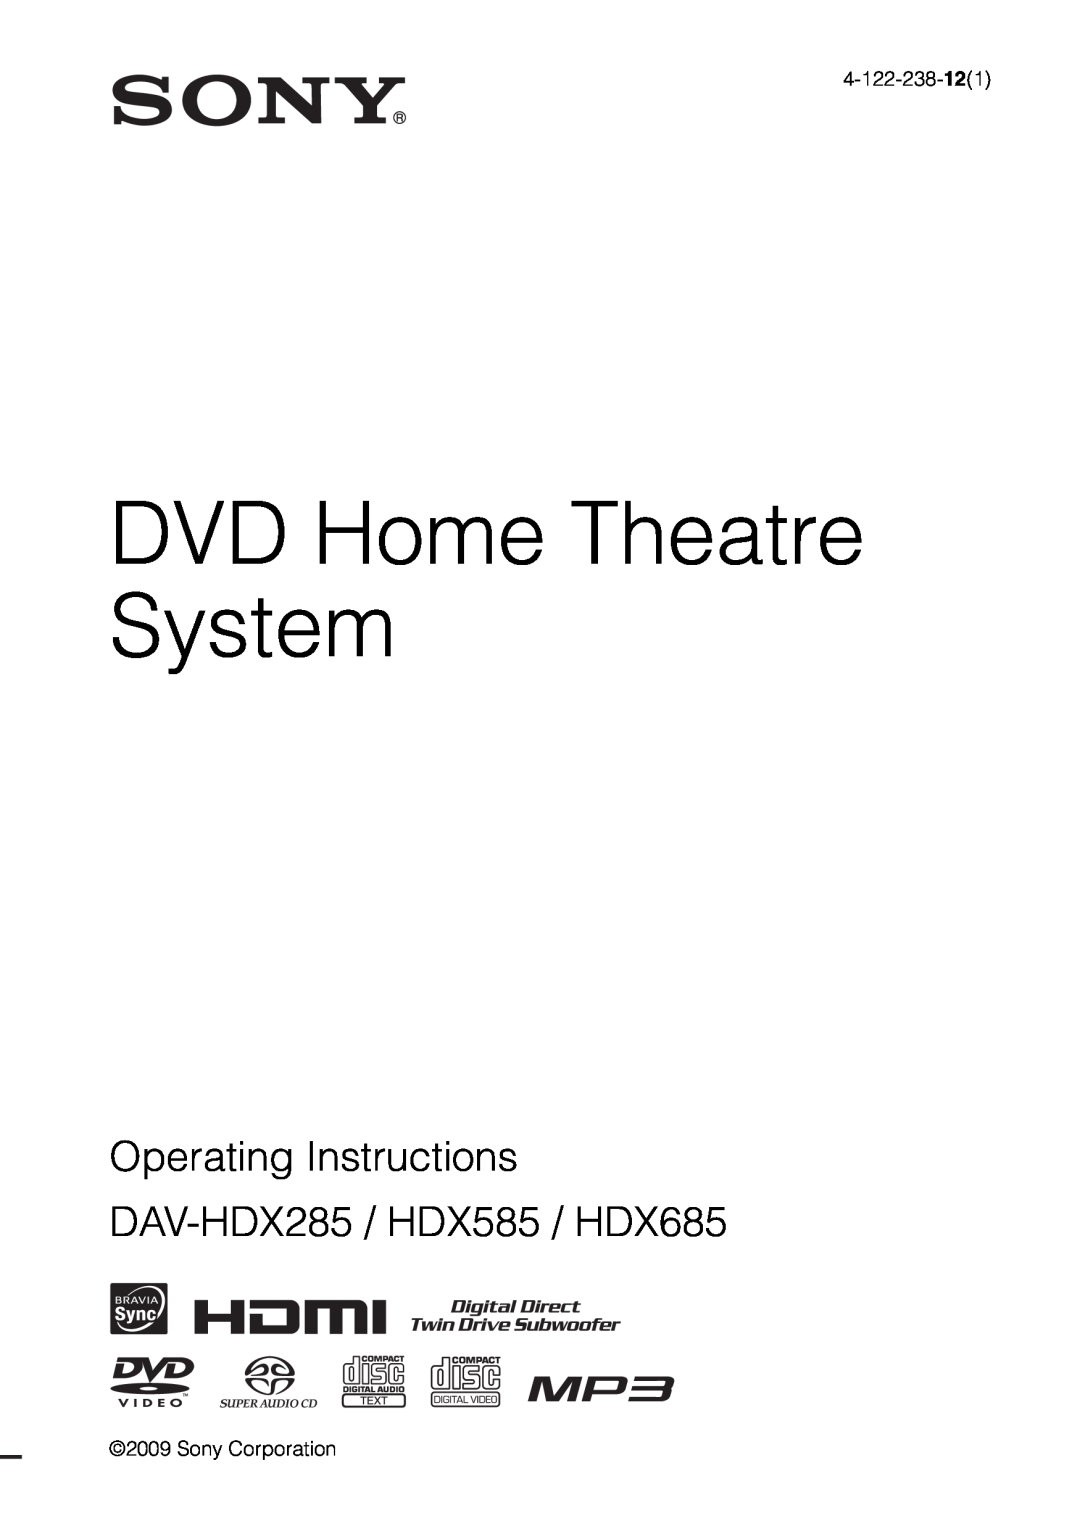 Sony DAV-HDX685 manual DVD Home Theatre System, Operating Instructions, DAV-HDX285 /HDX585 / HDX685 